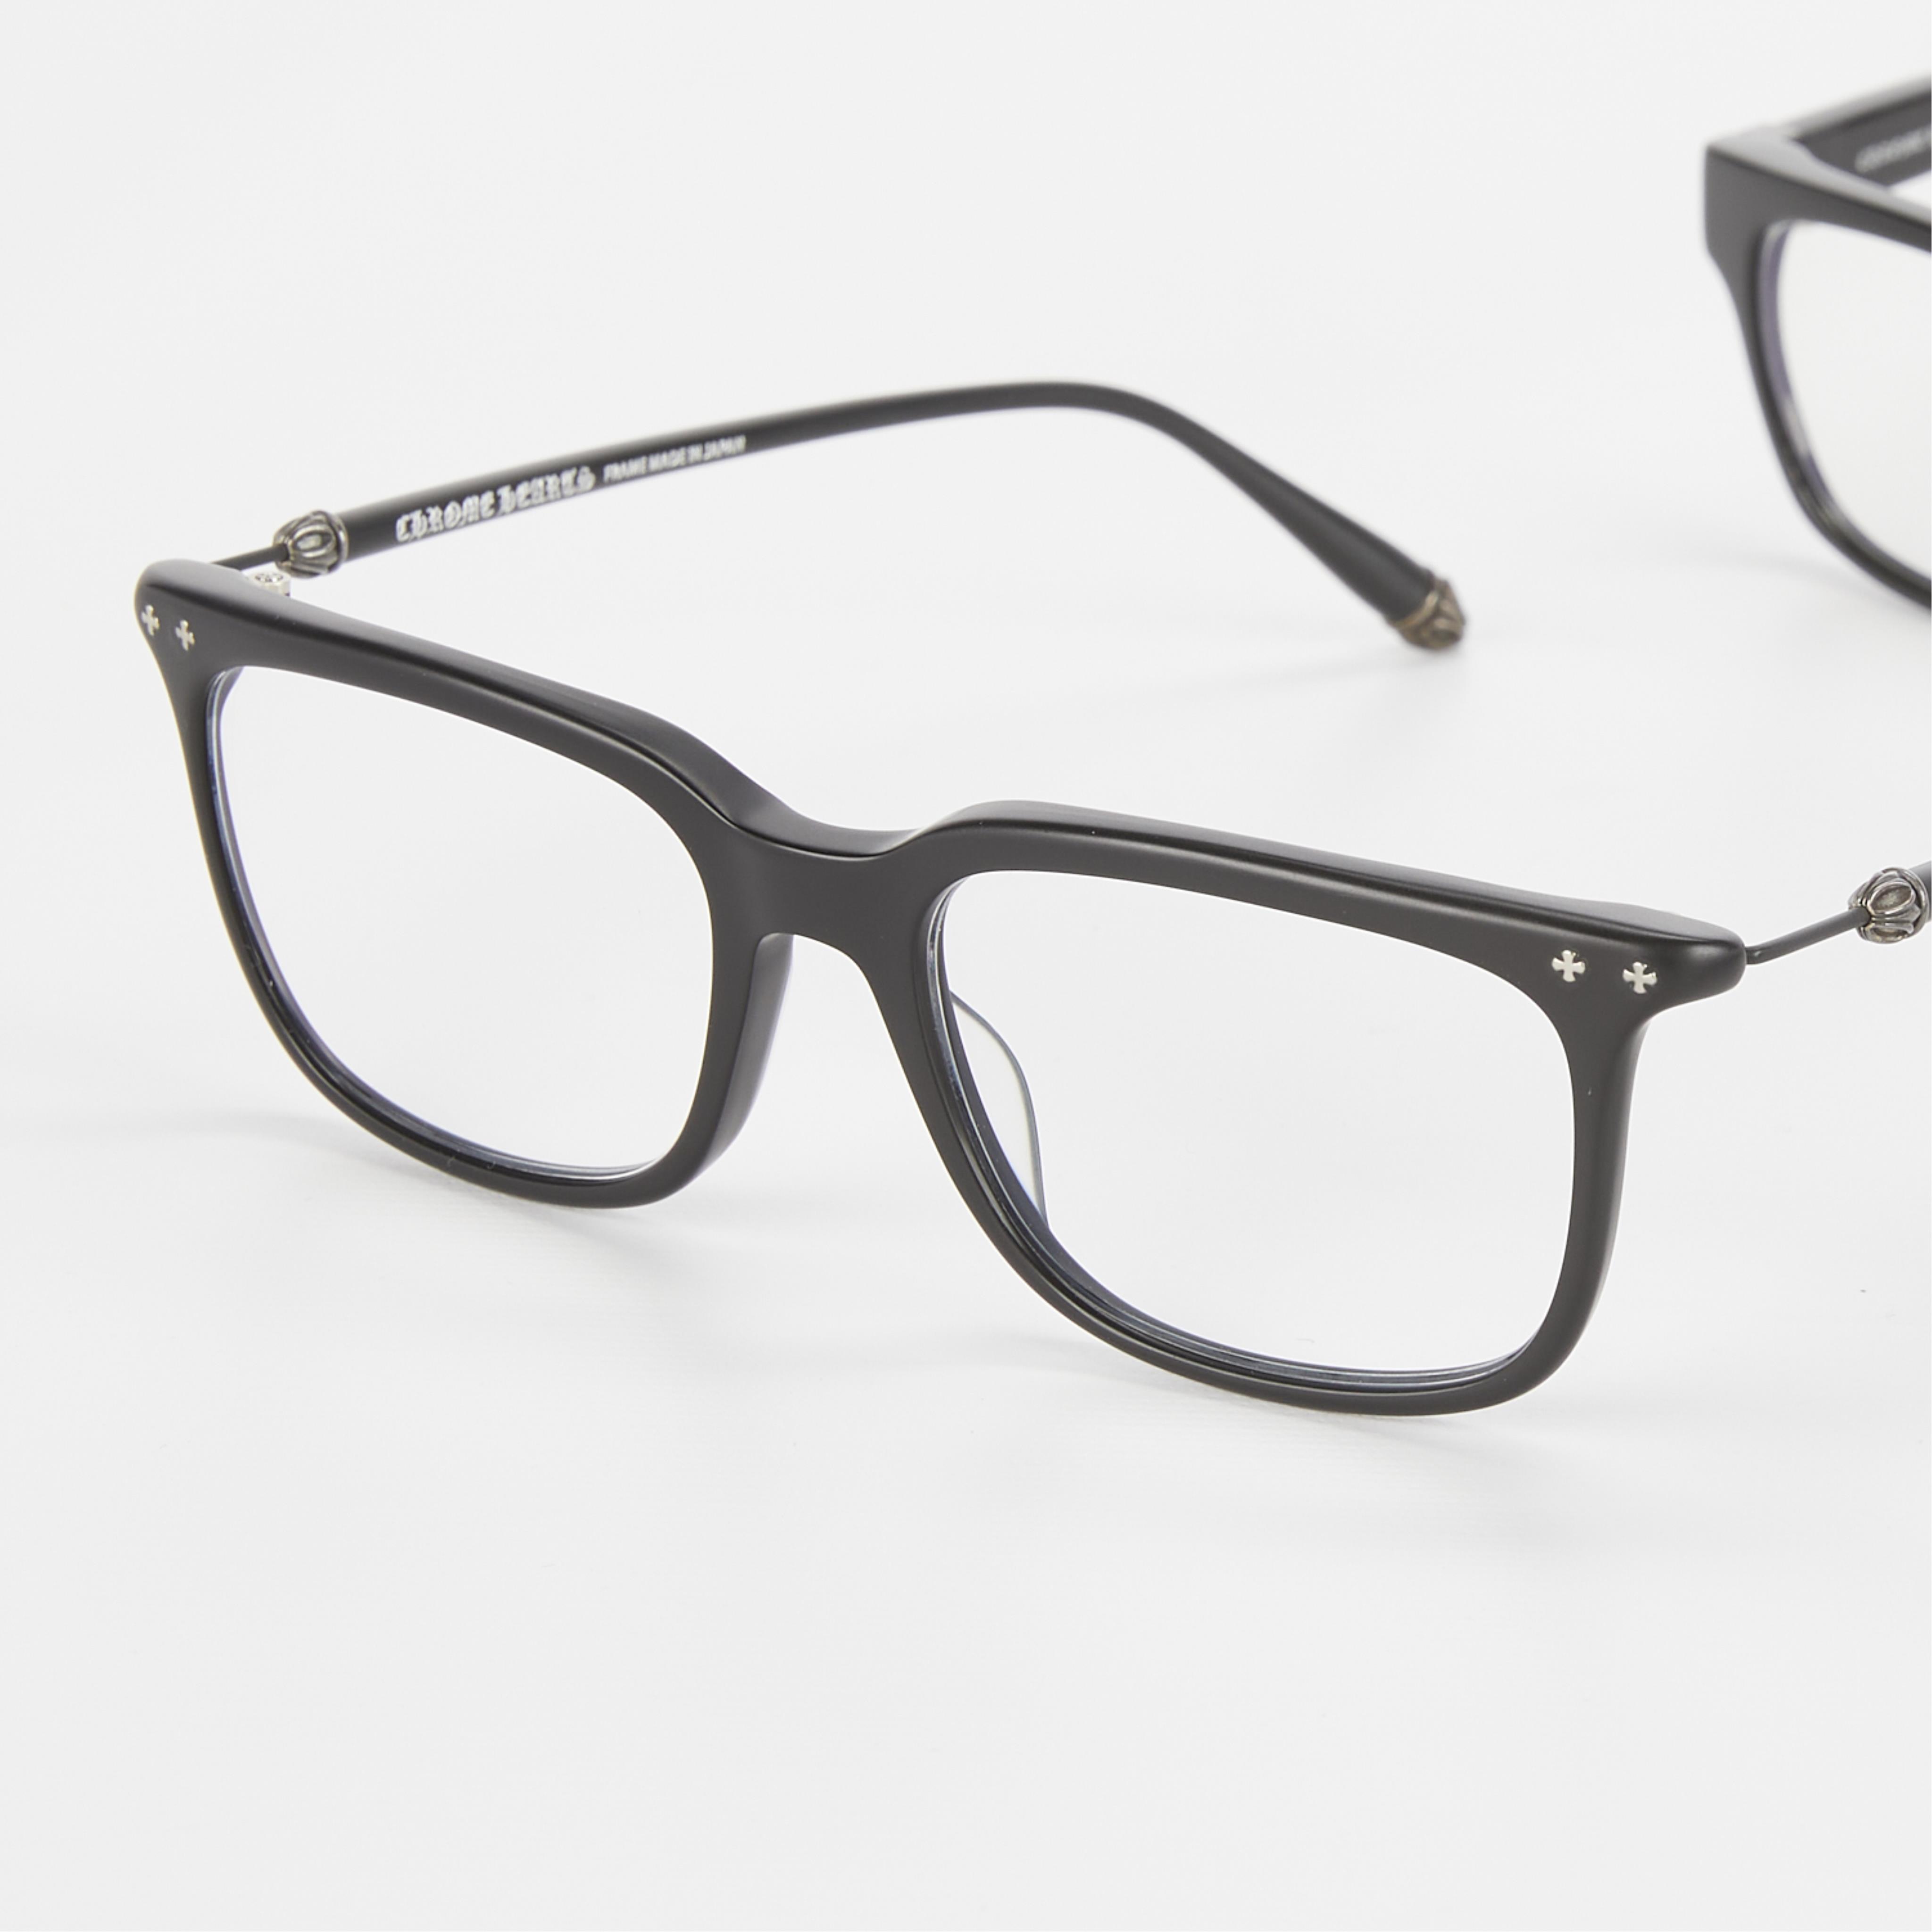 Grp of 7 Chrome Hearts Eyeglasses - Image 2 of 15